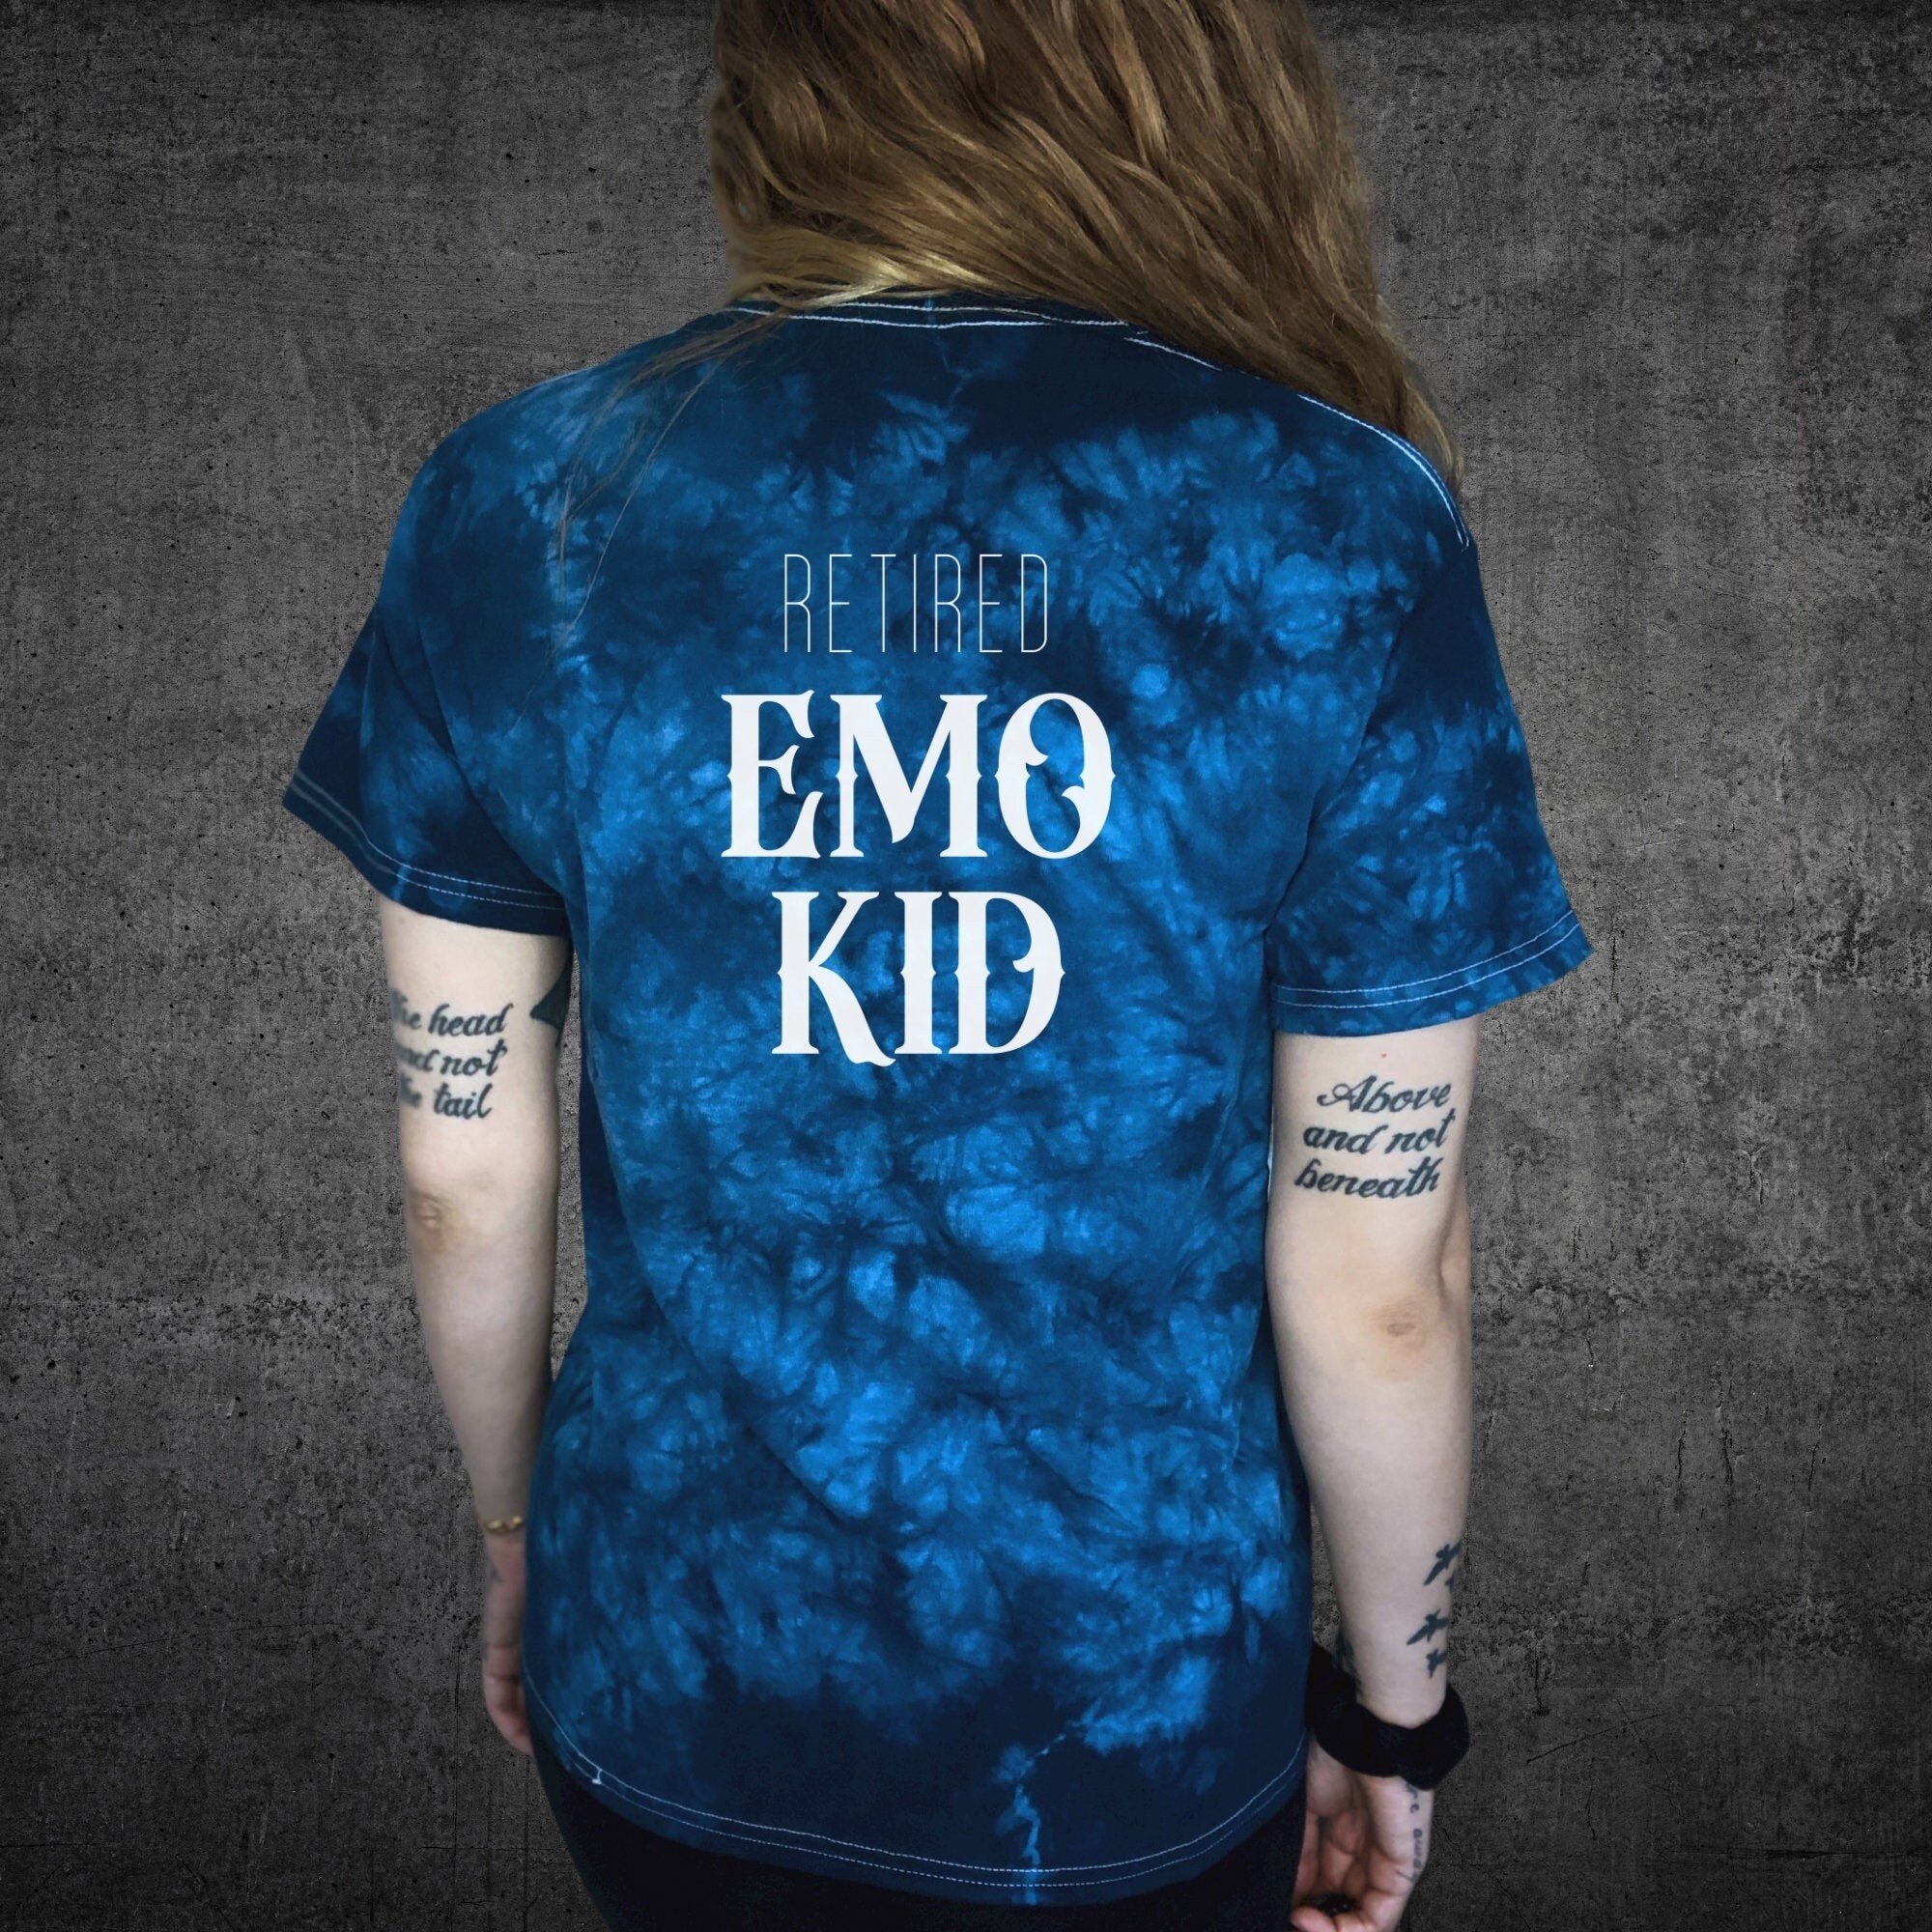 I Love Emo Boys Shirt Emo Clothing Emo Gifts T Shirt for -  Finland